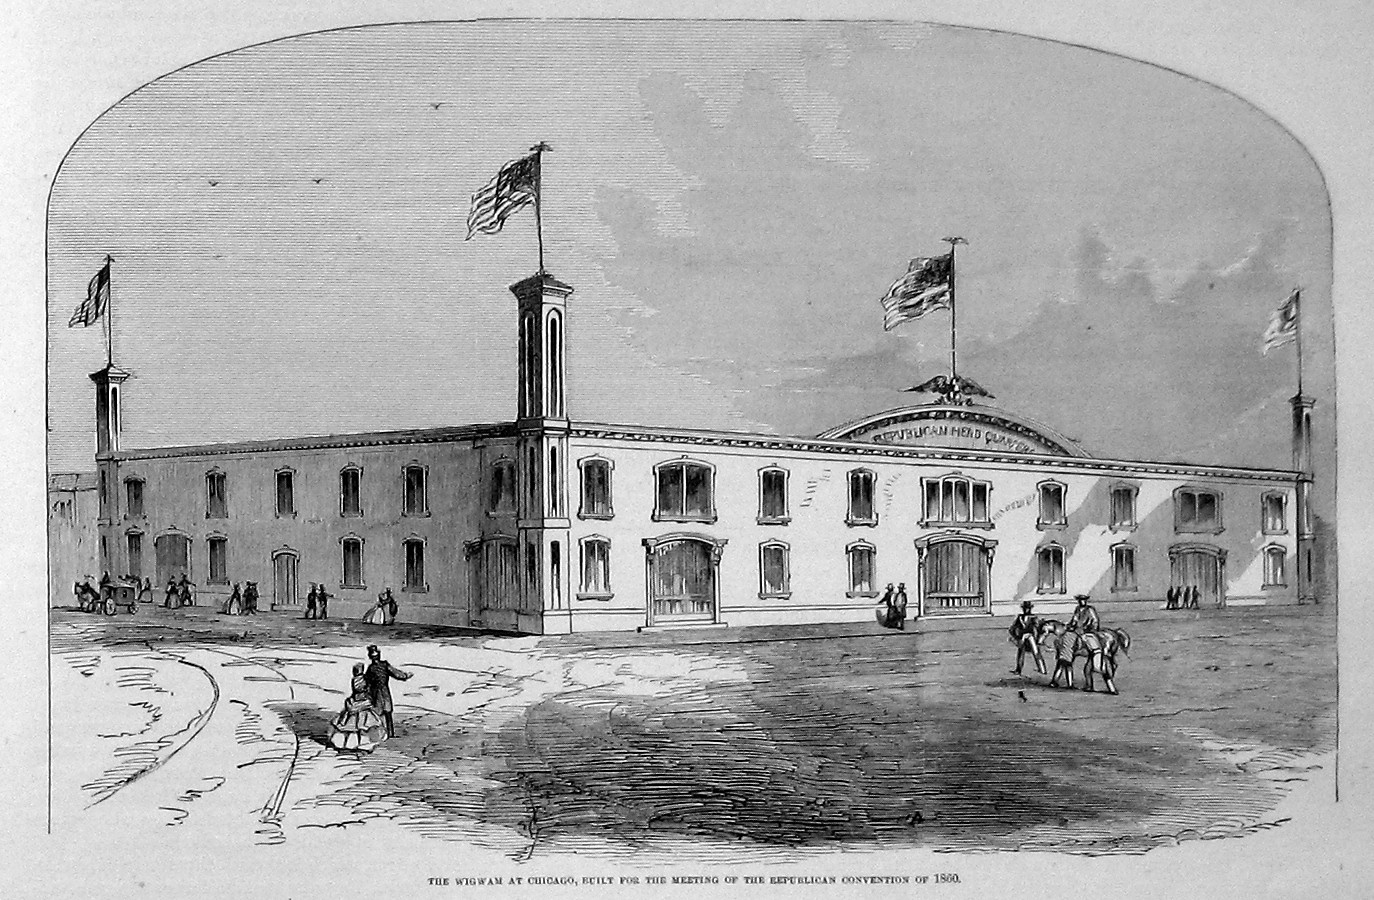 wigwam chicago republican convention 1860